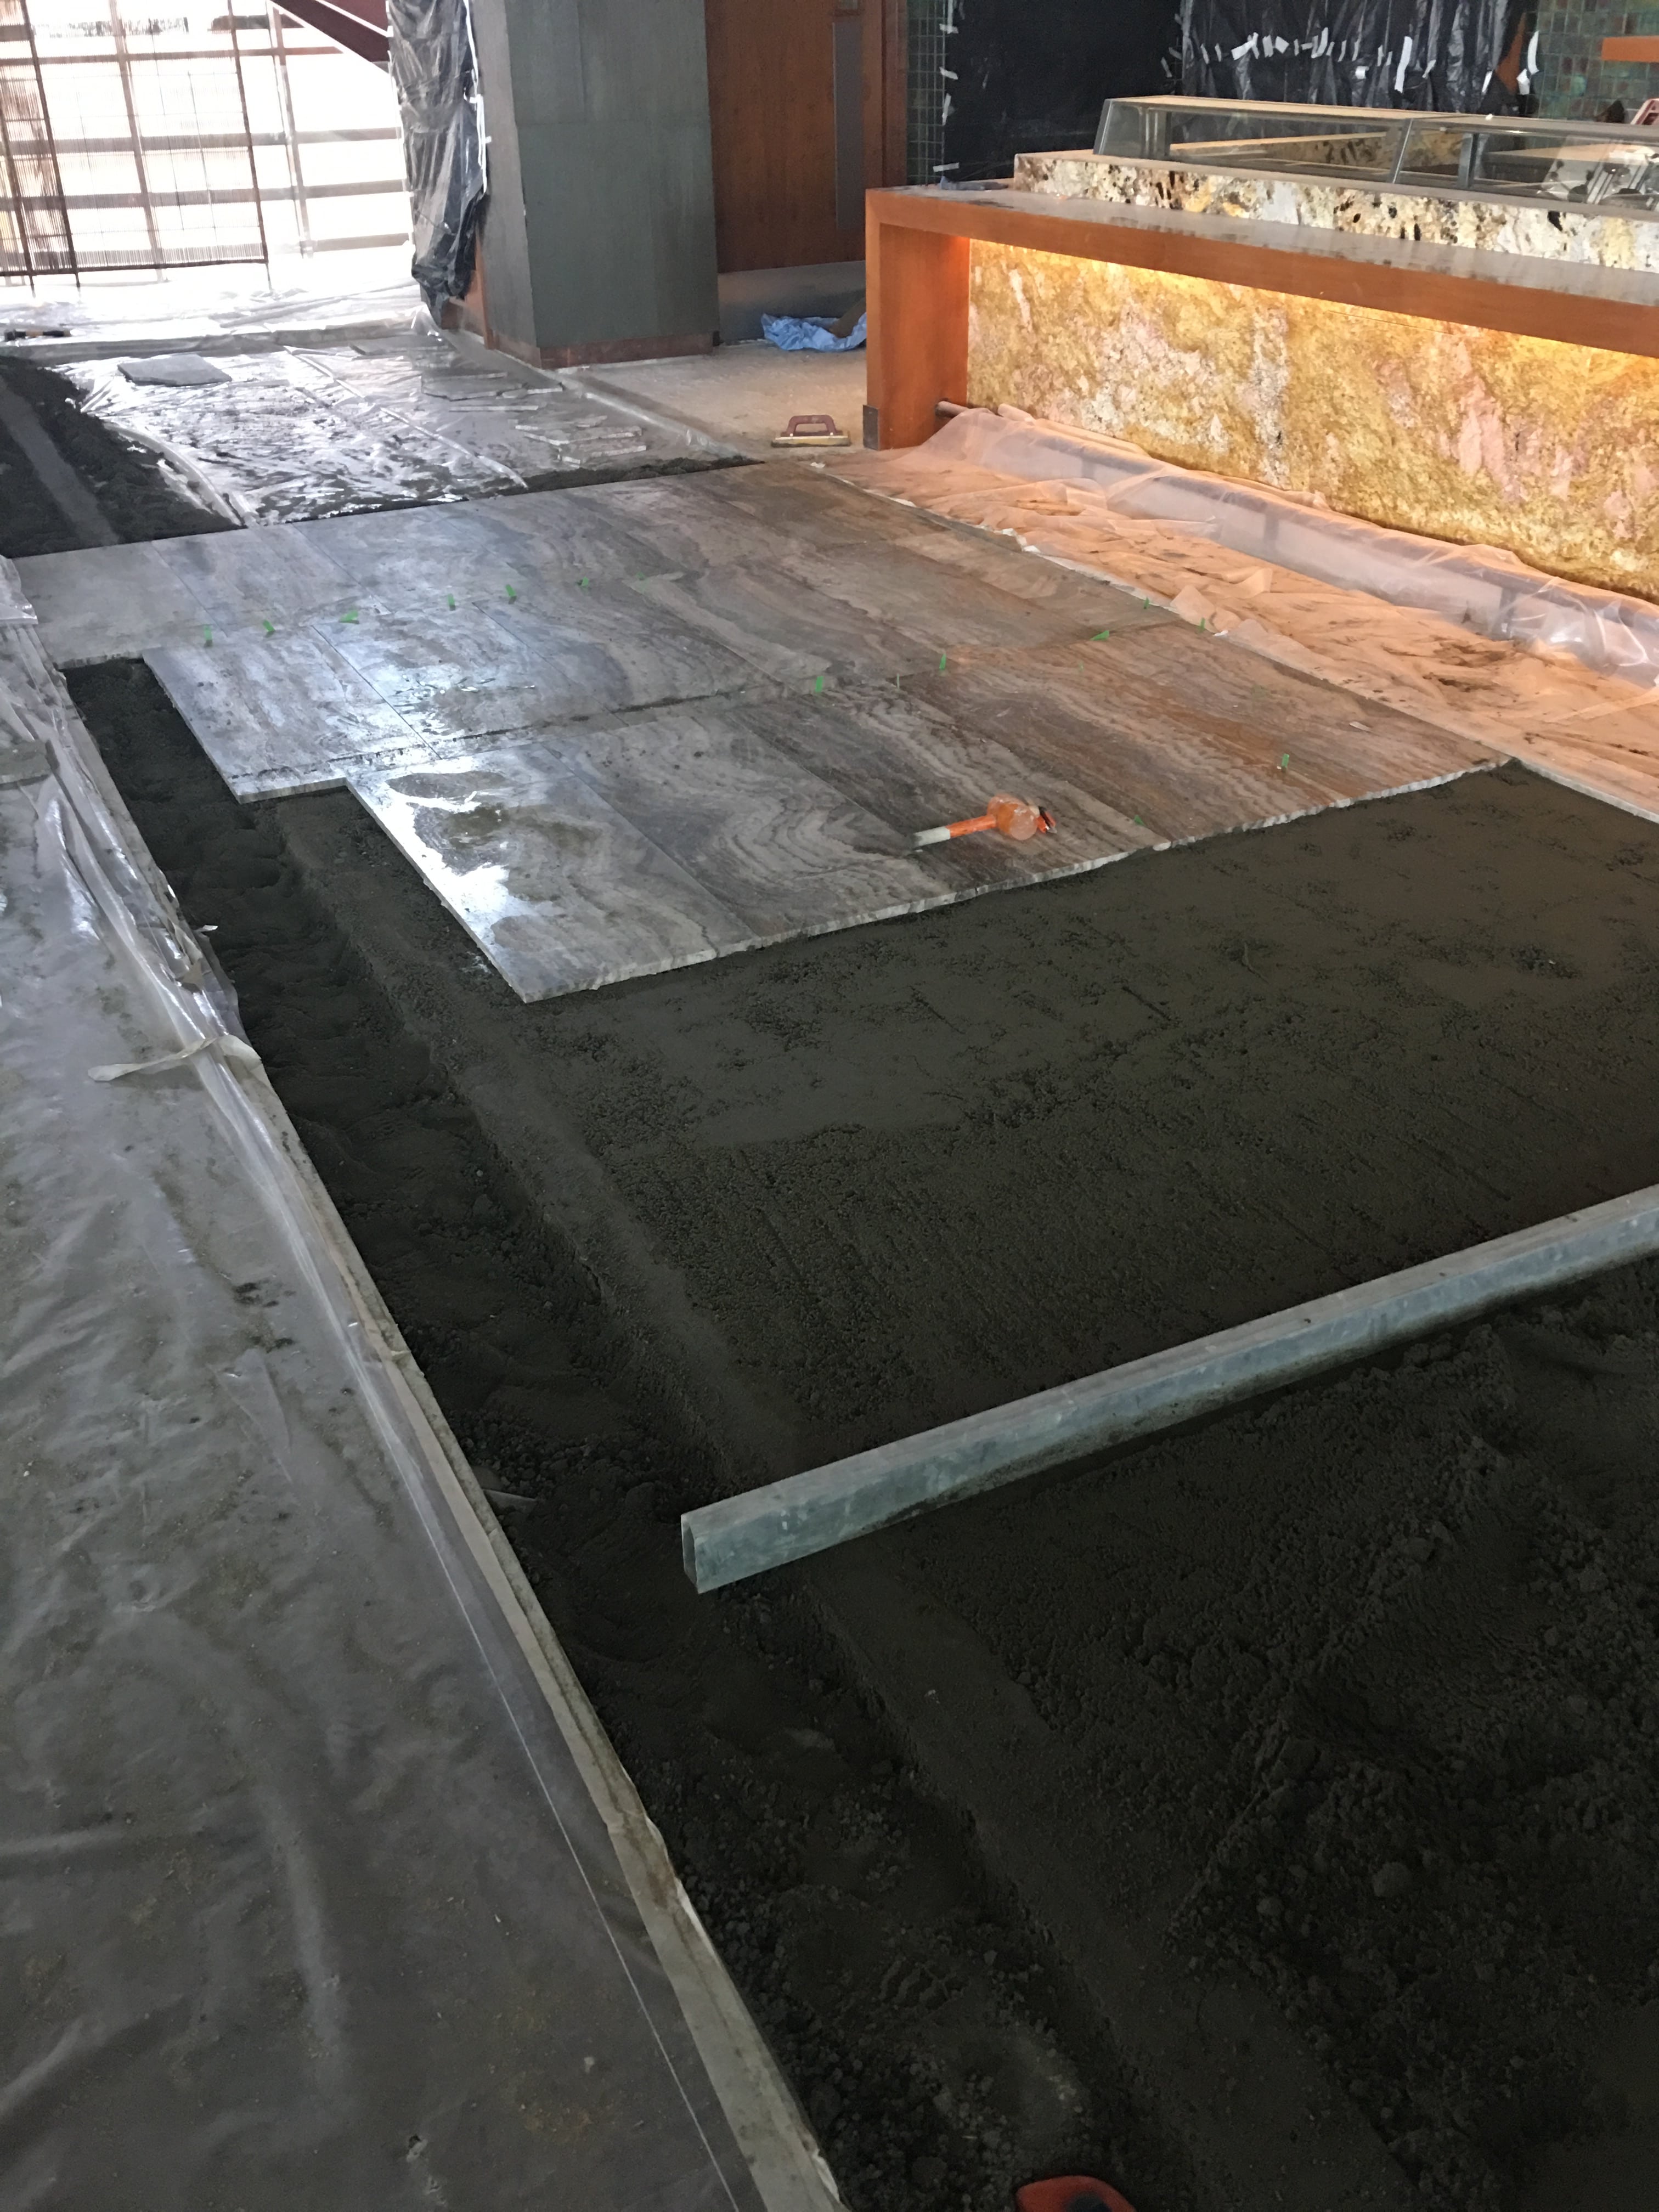 NOBU exclusive restaurant – new stone floor installation